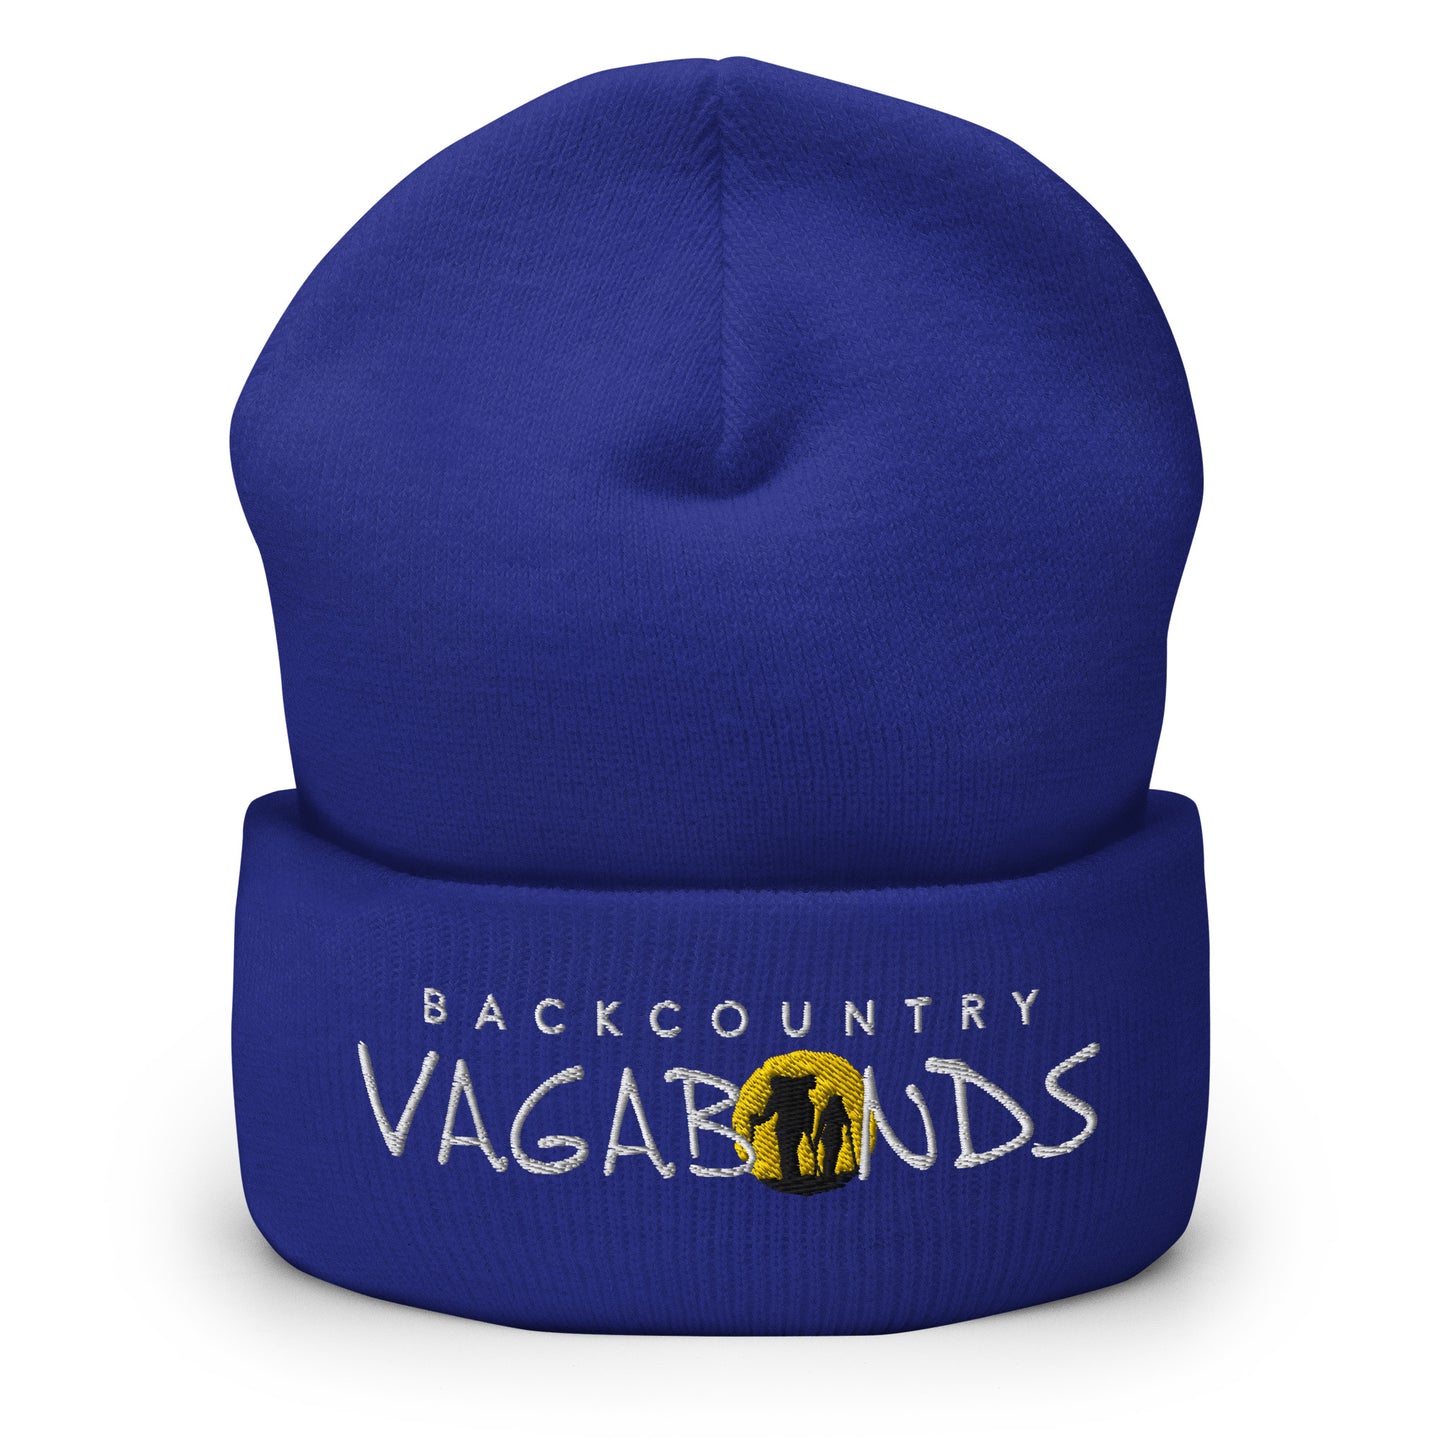 Backcountry Vagabonds Cuffed Beanie